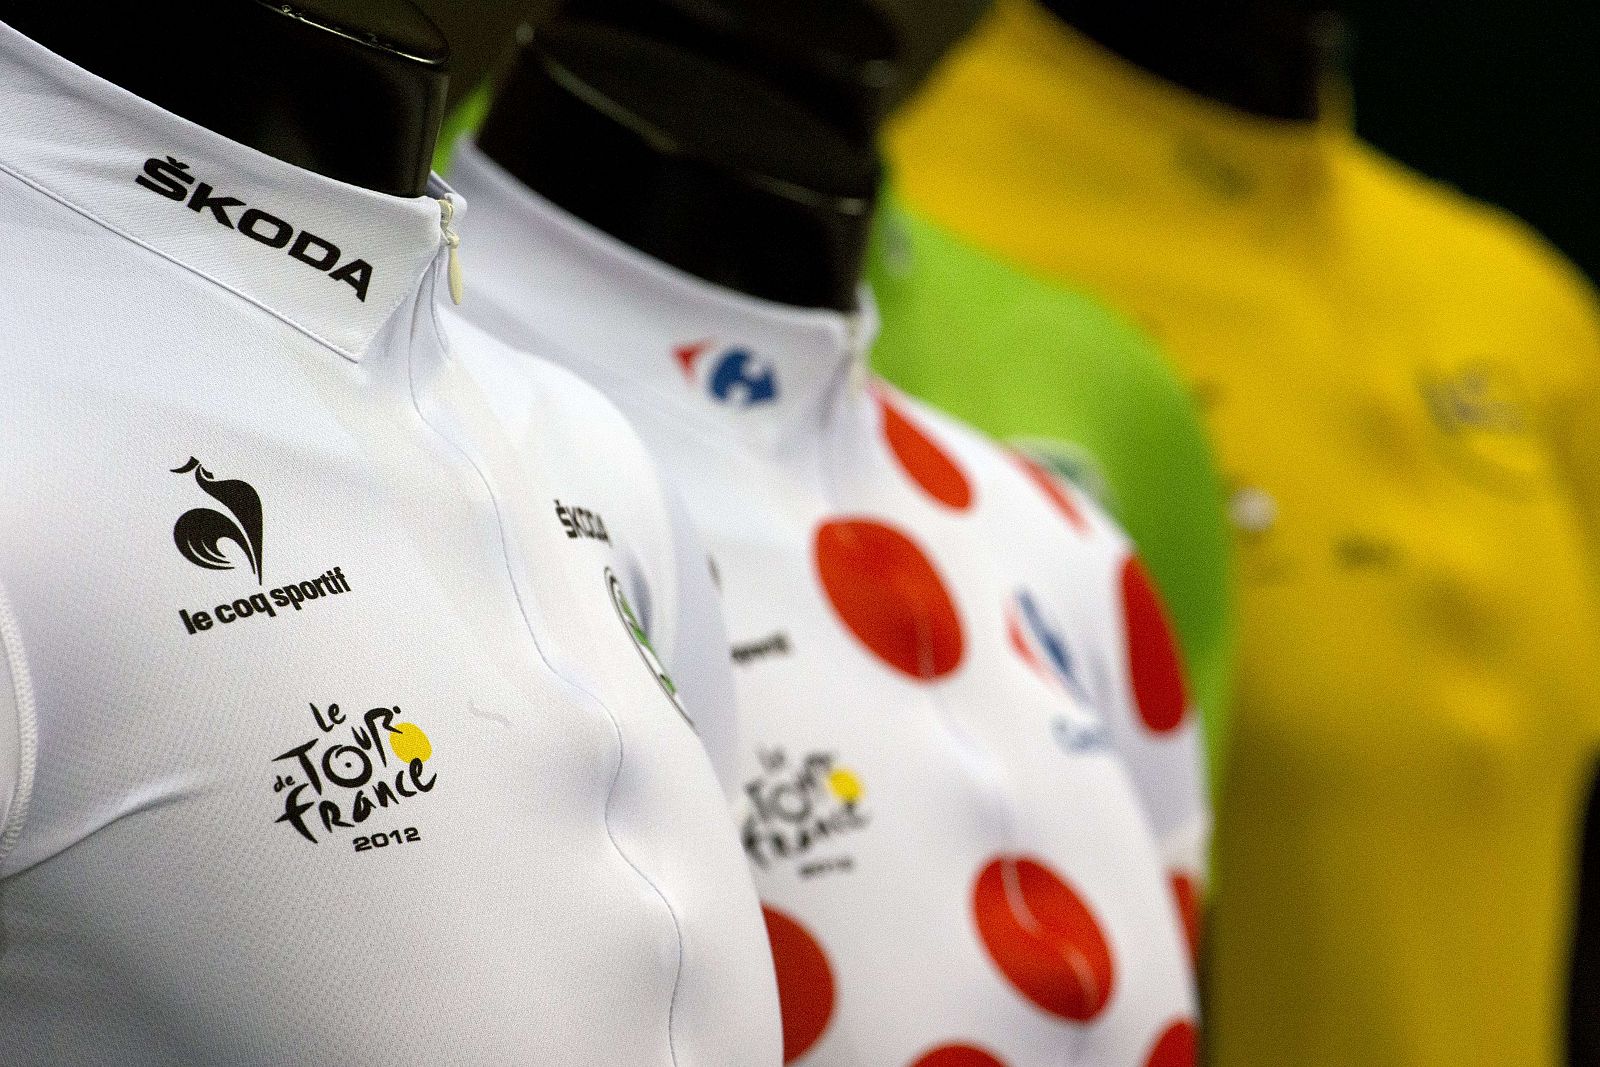 Imagen de los maillots oficiales del Tour de Francia de la marca Le Coq Sportif.